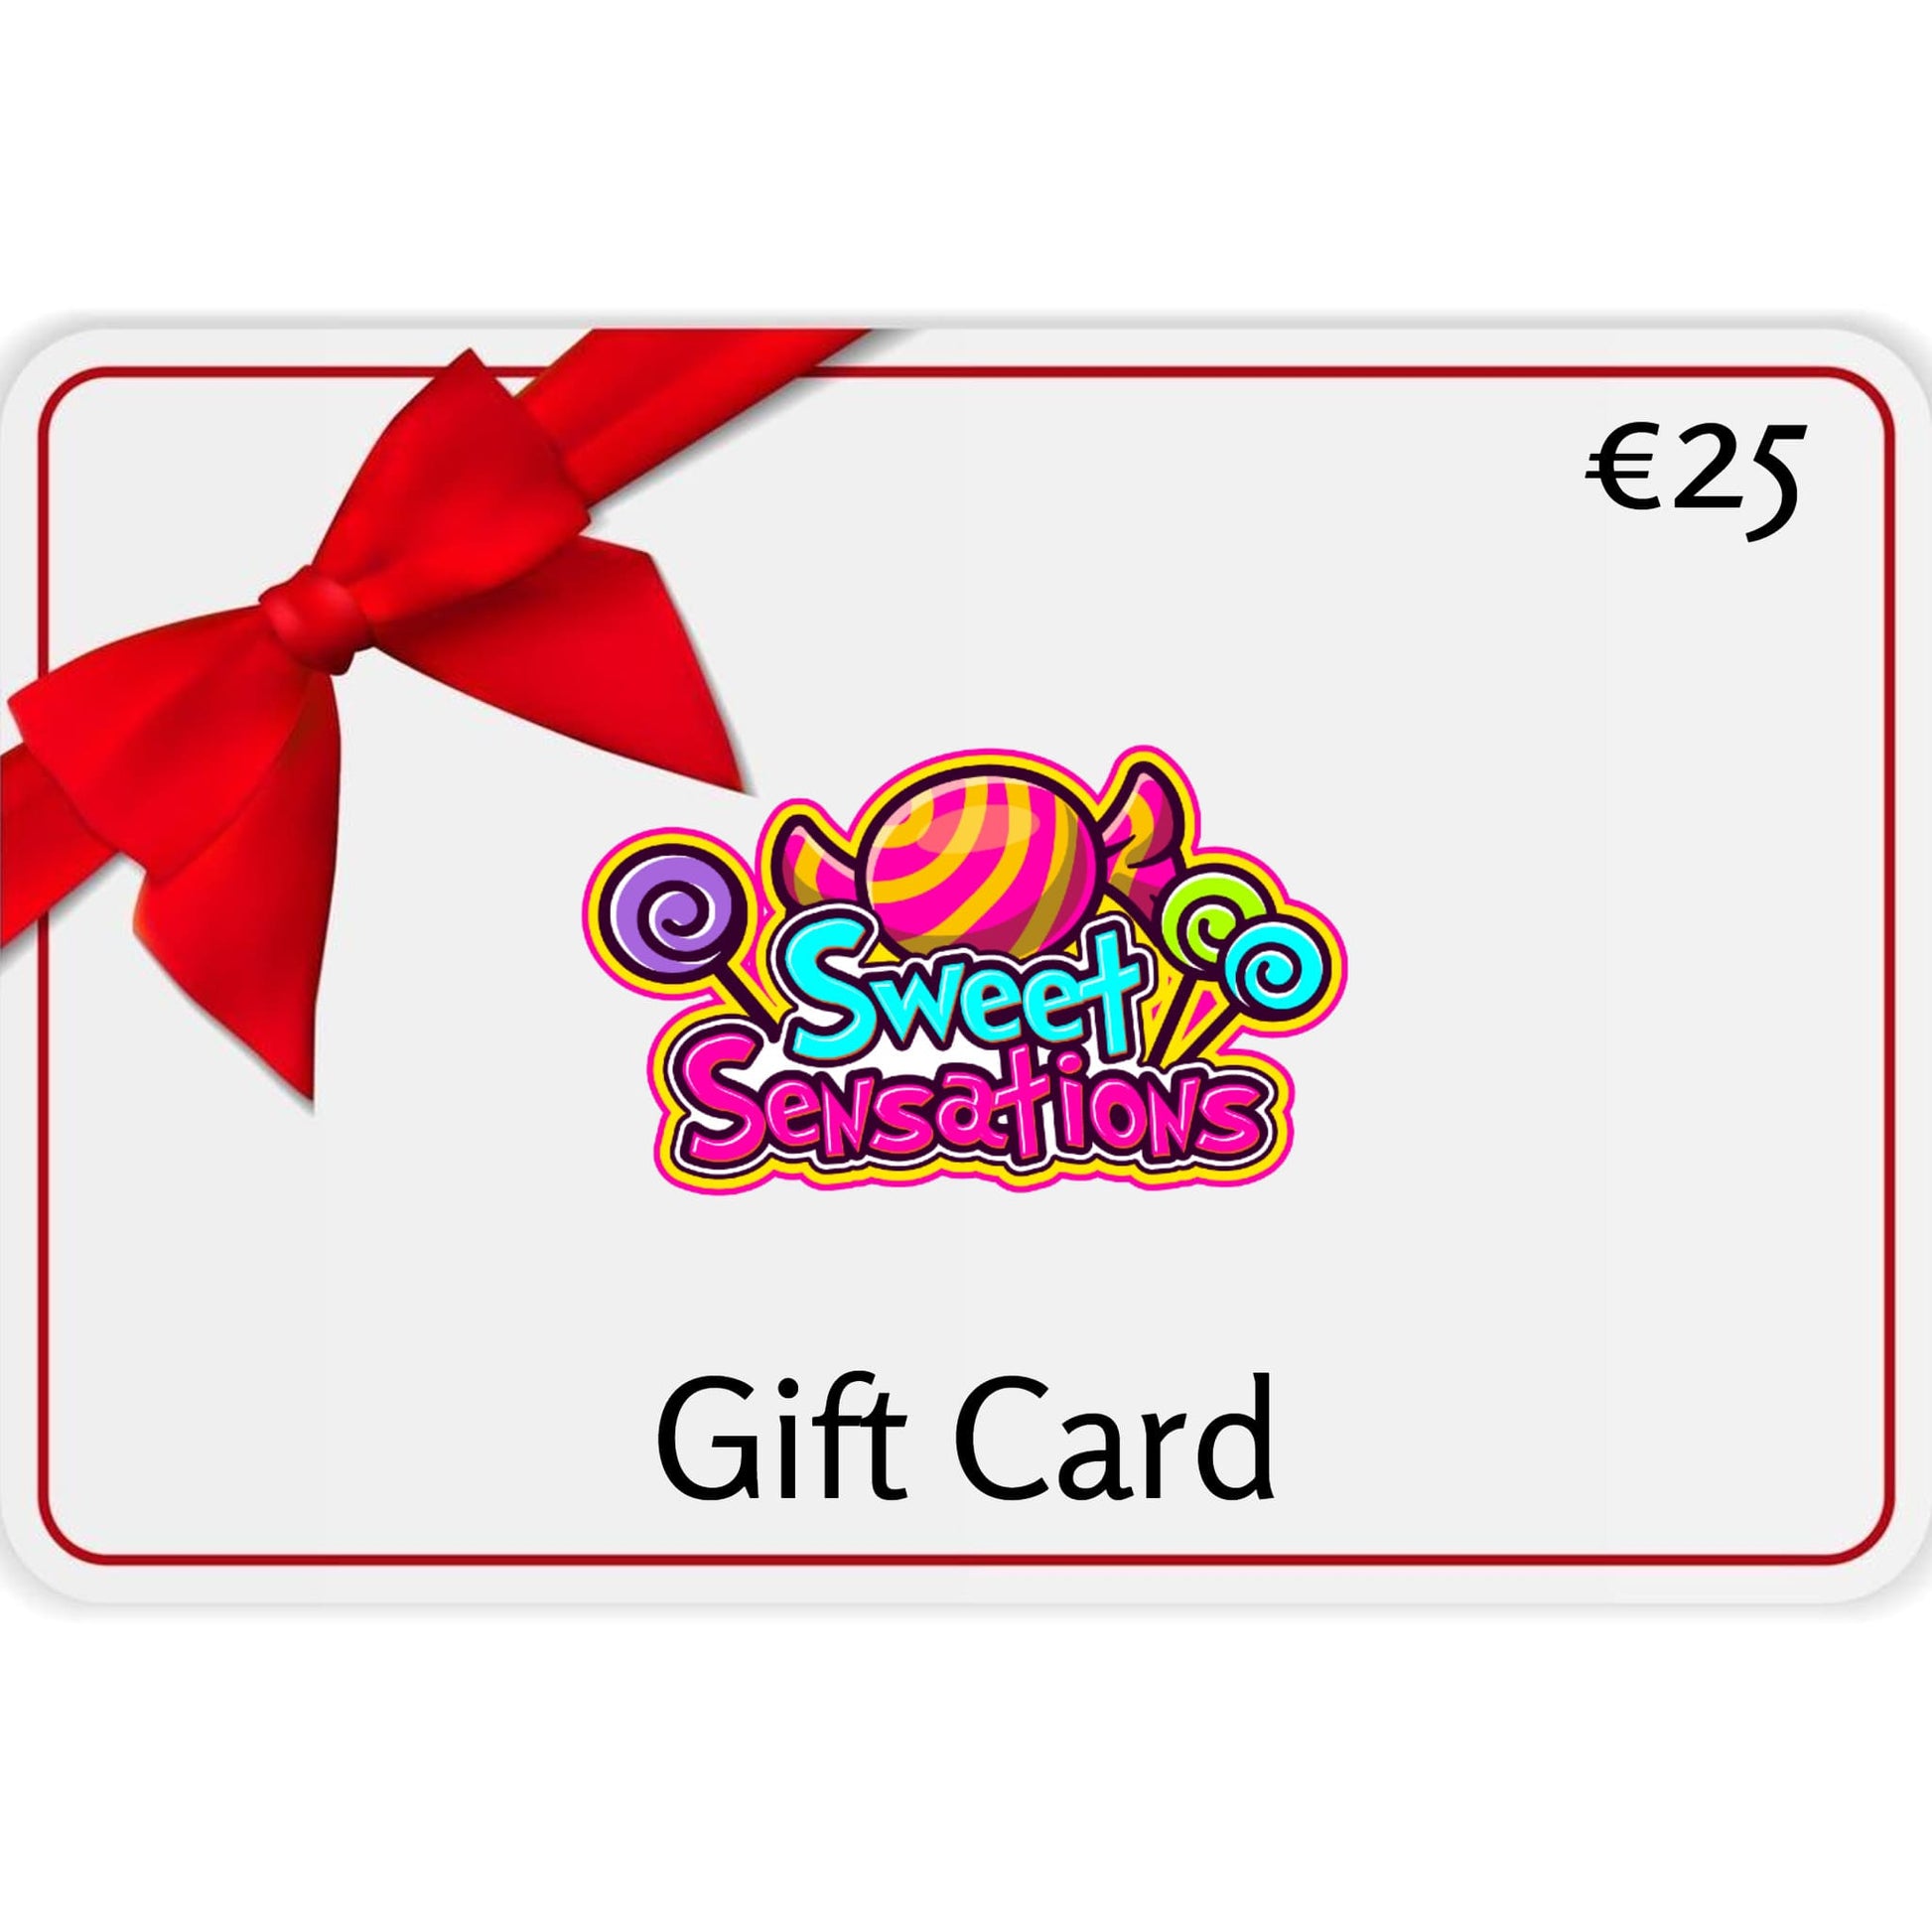 Sweet Sensations €25 Gift Card